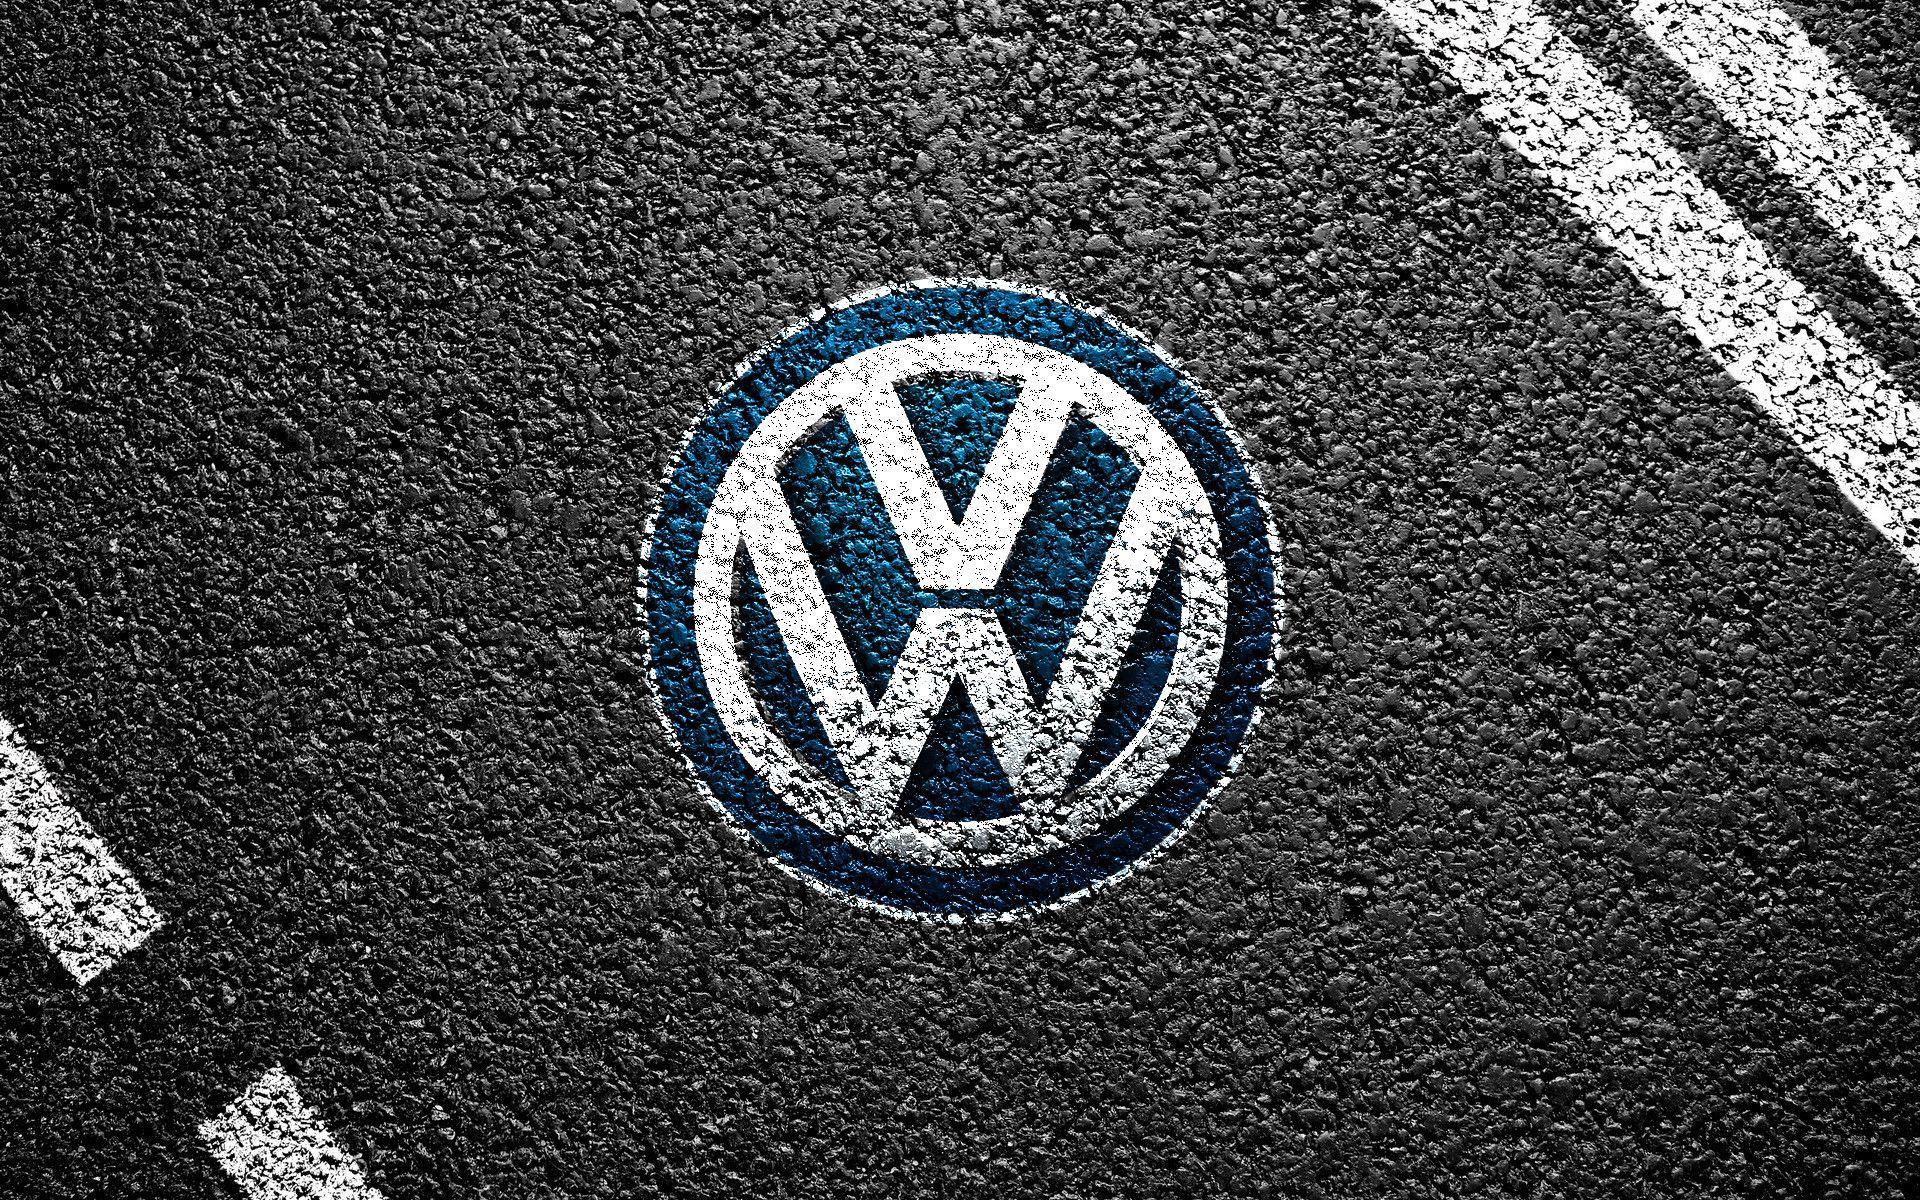 Cute VW Logo - Volkswagen Logo Wallpaper